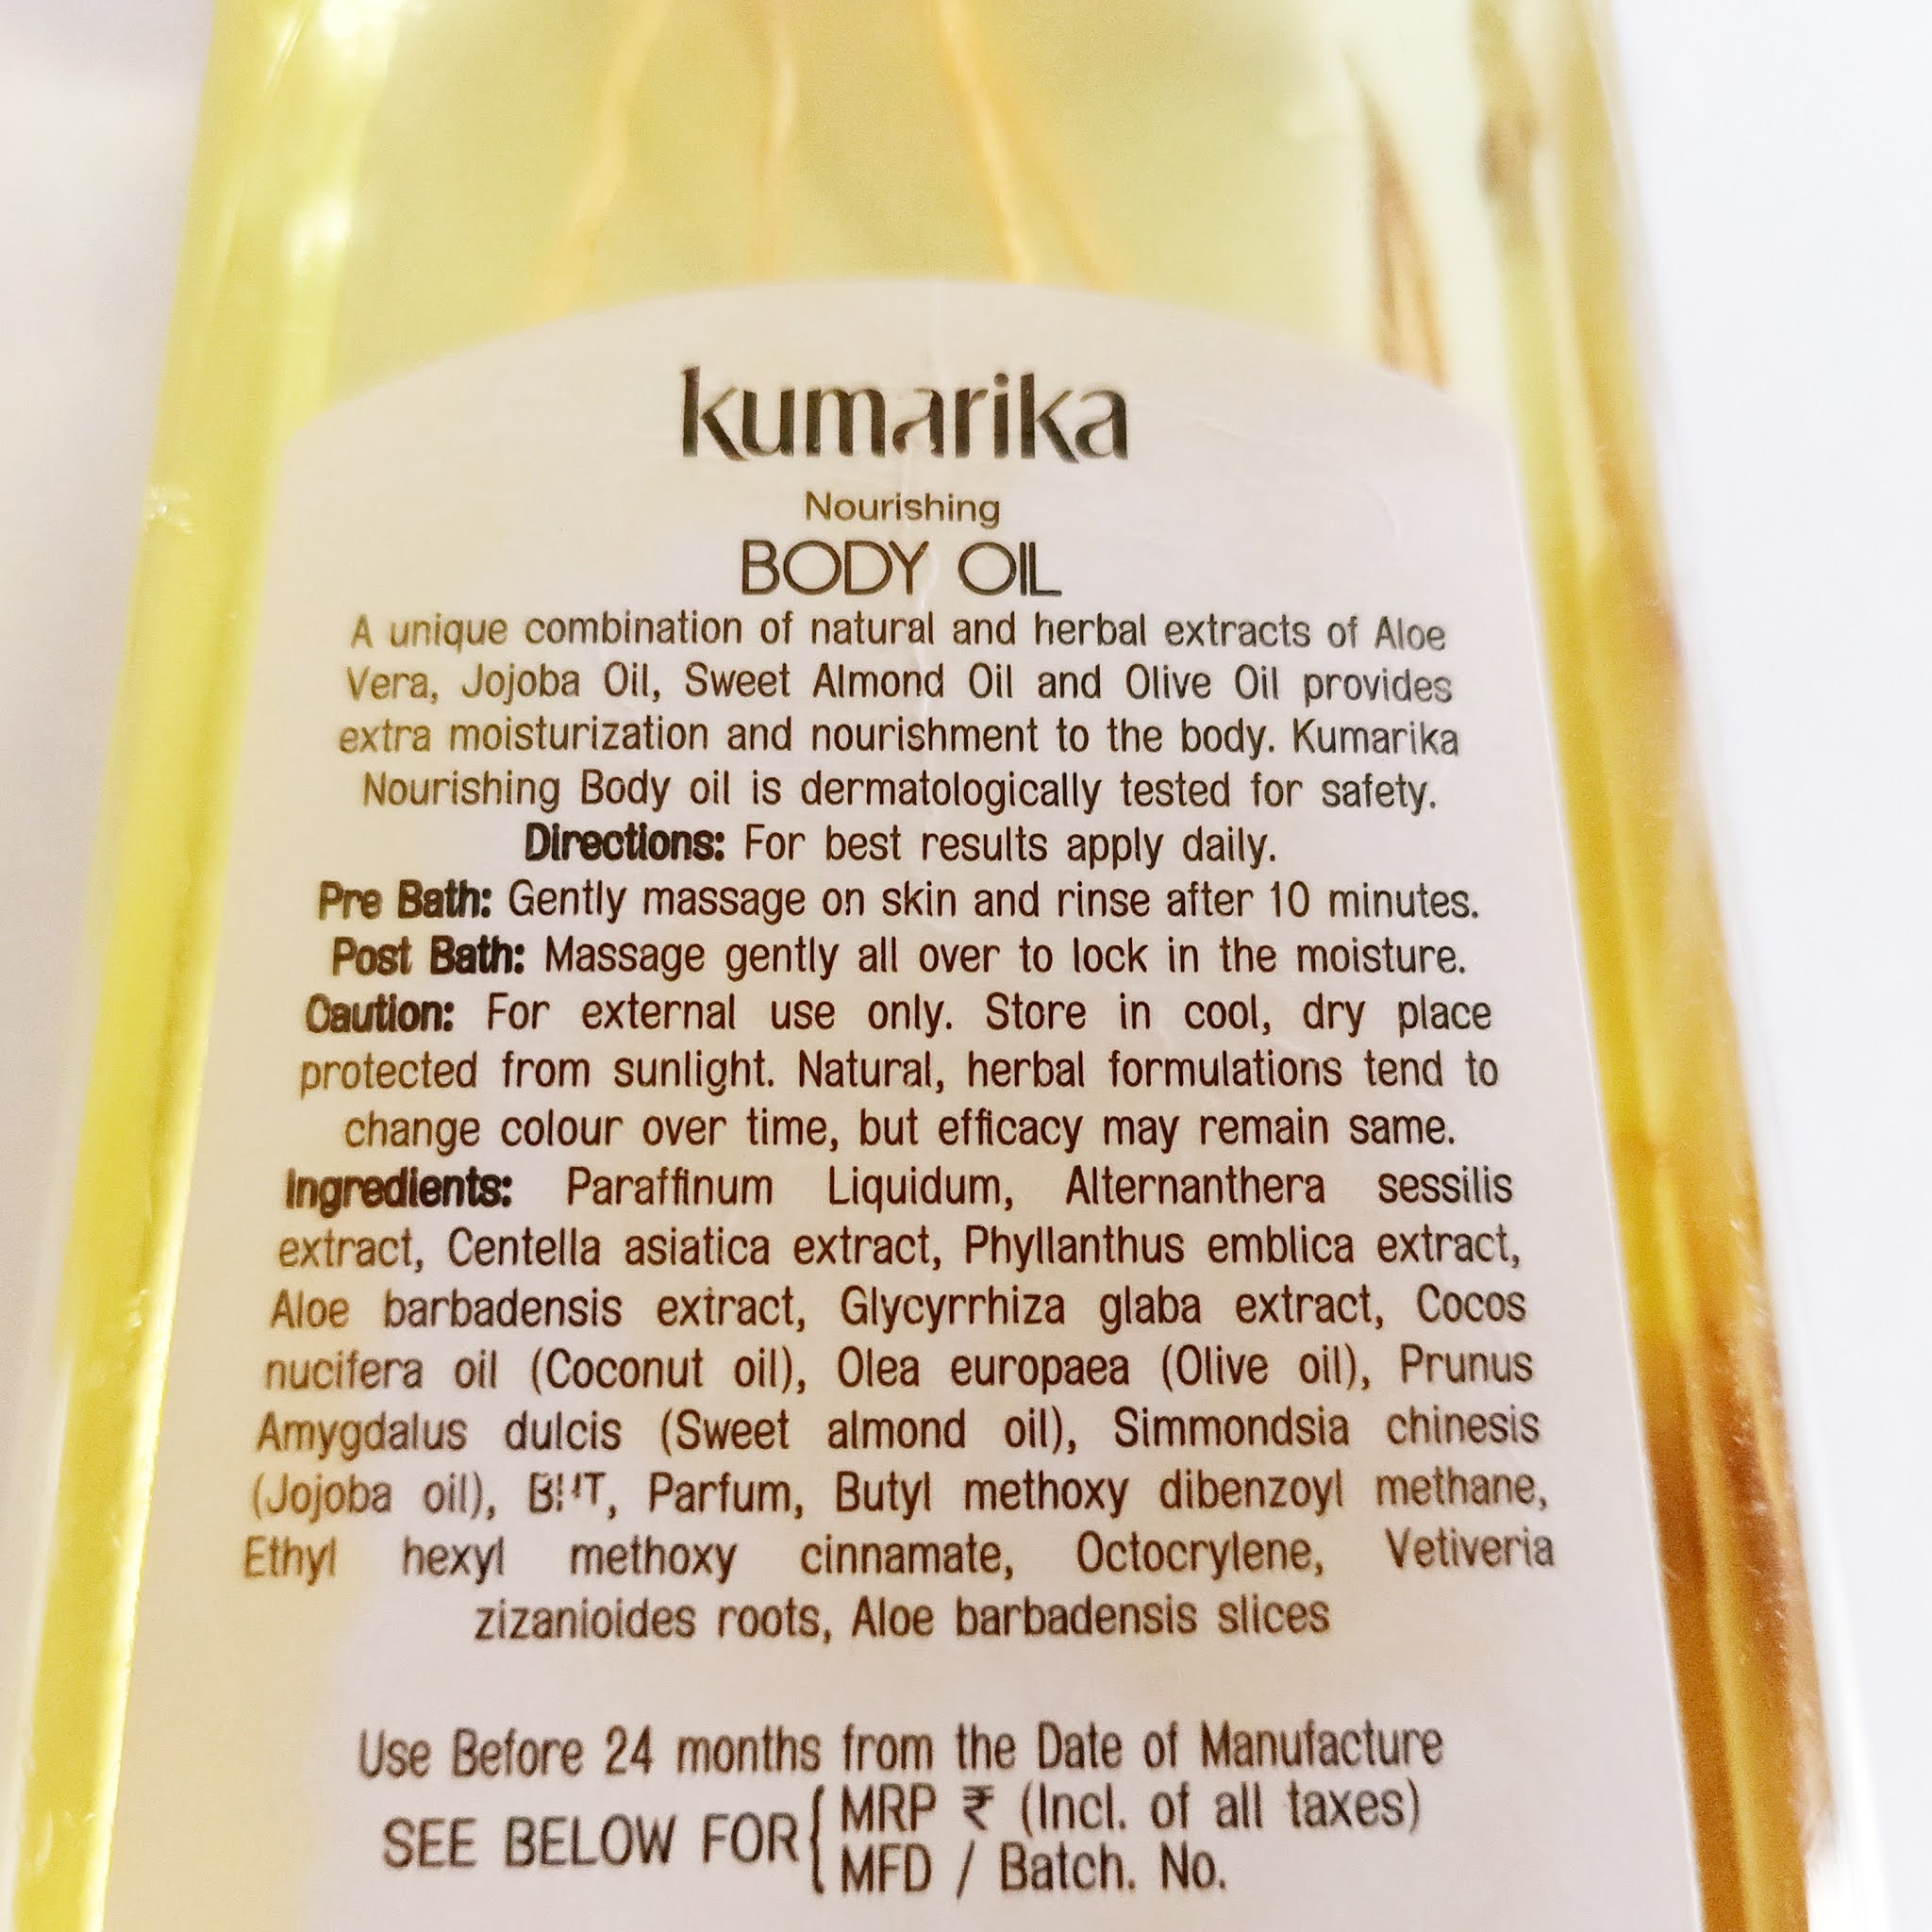 Review of Kumarika Nourishing Body Oil - Elegant Eves